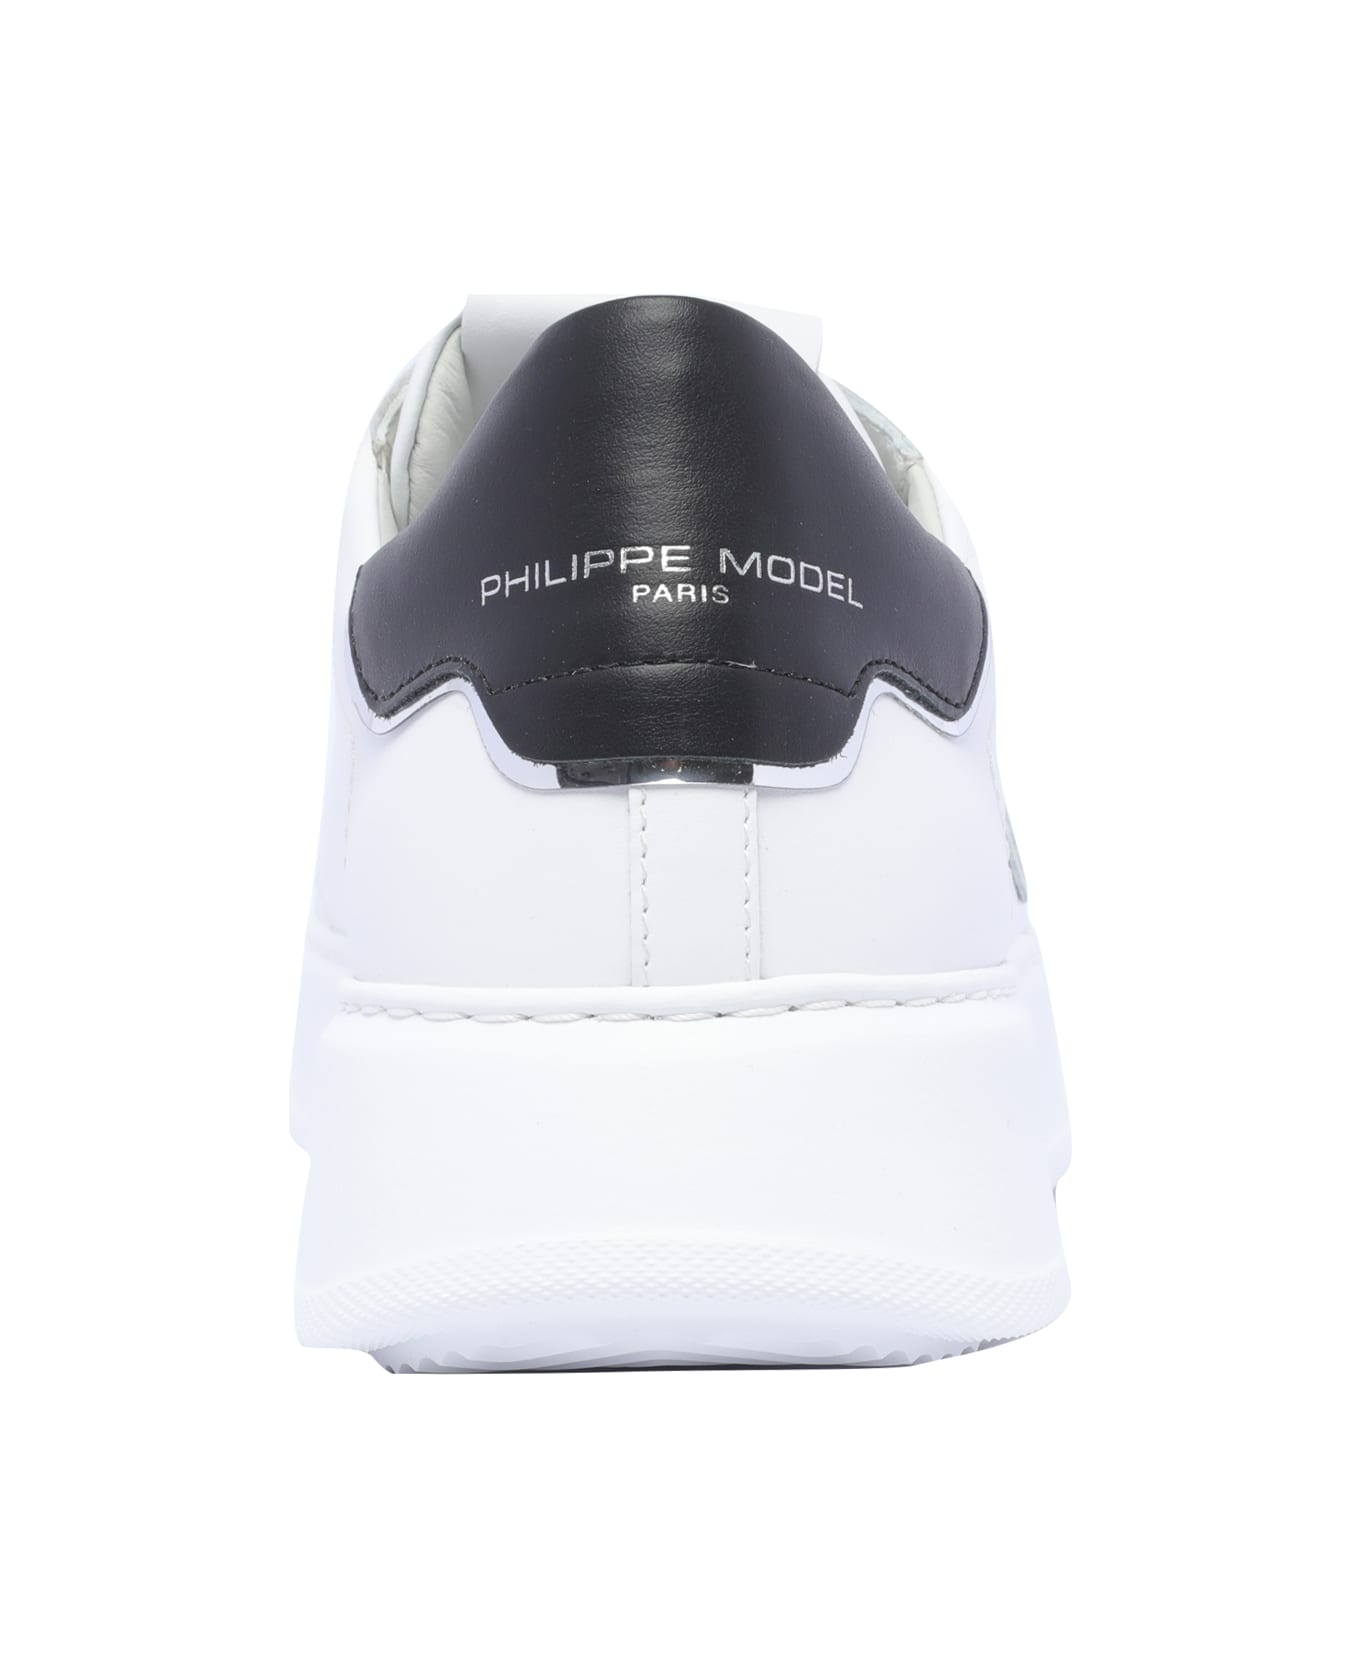 Philippe Model Temple Sneakers - WHITE/BLACK